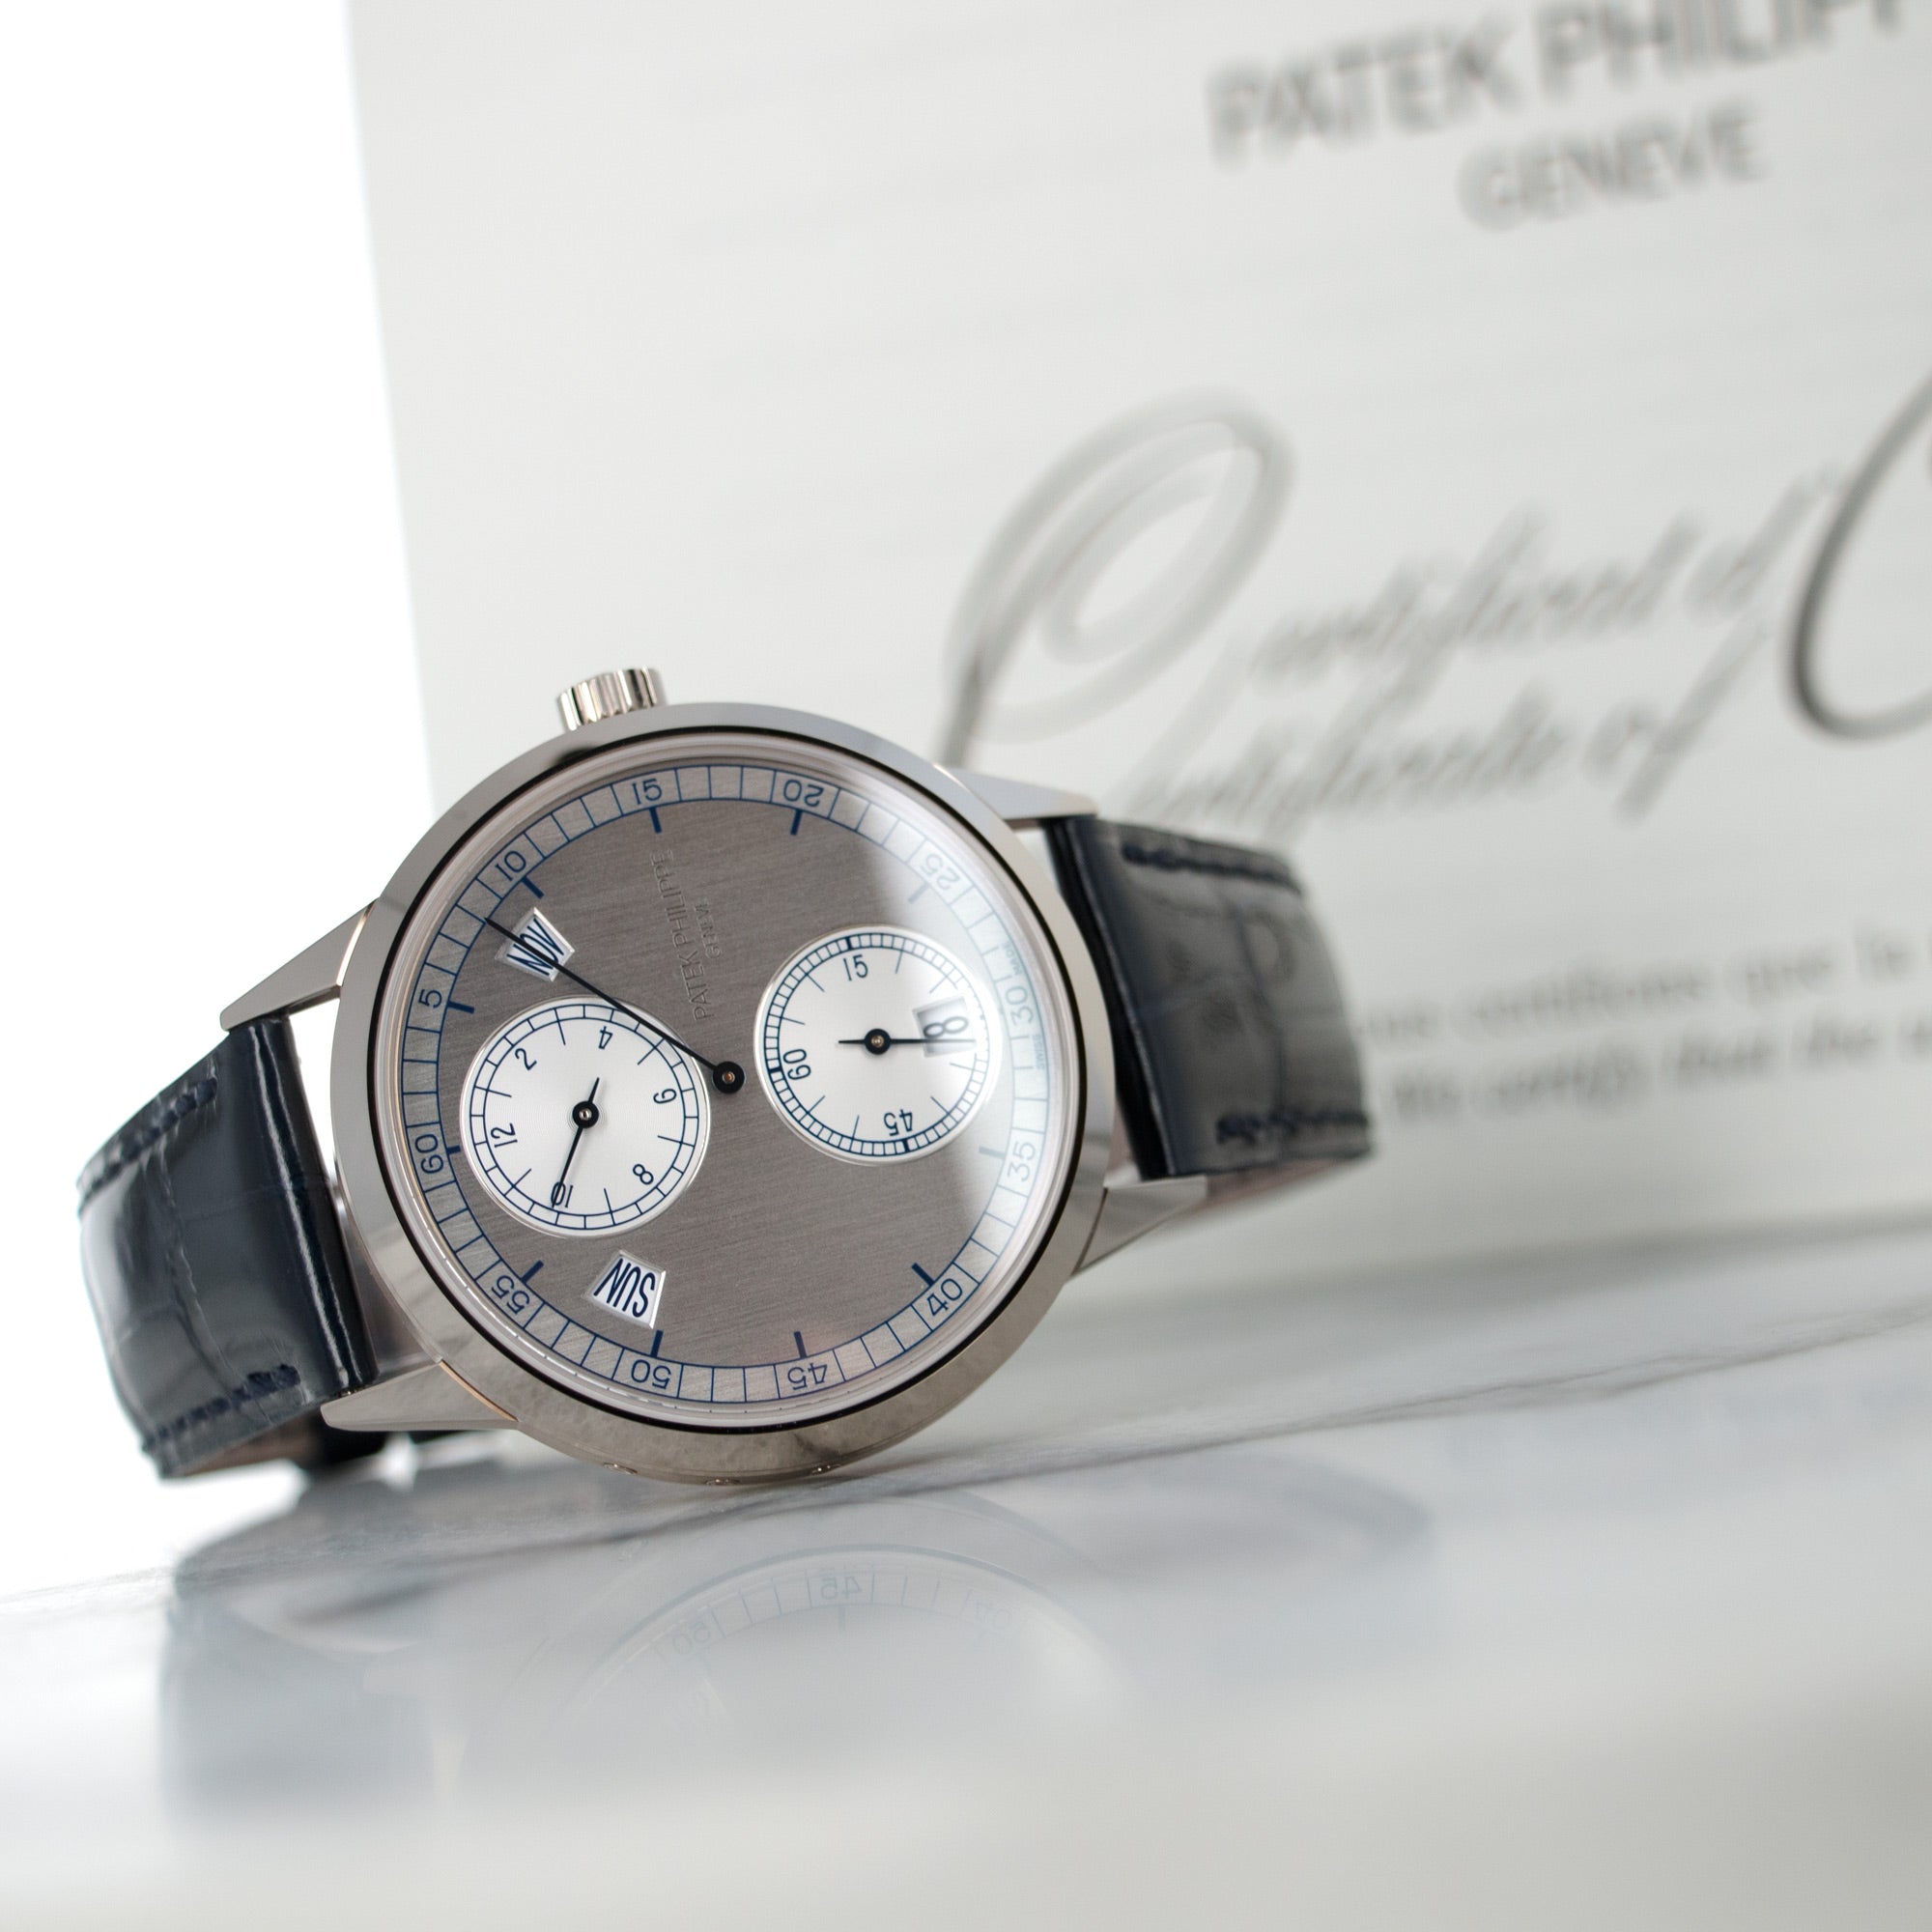 Patek Philippe - Patek Philippe White Gold Annual Calendar Regulator Watch Ref. 5235 - The Keystone Watches